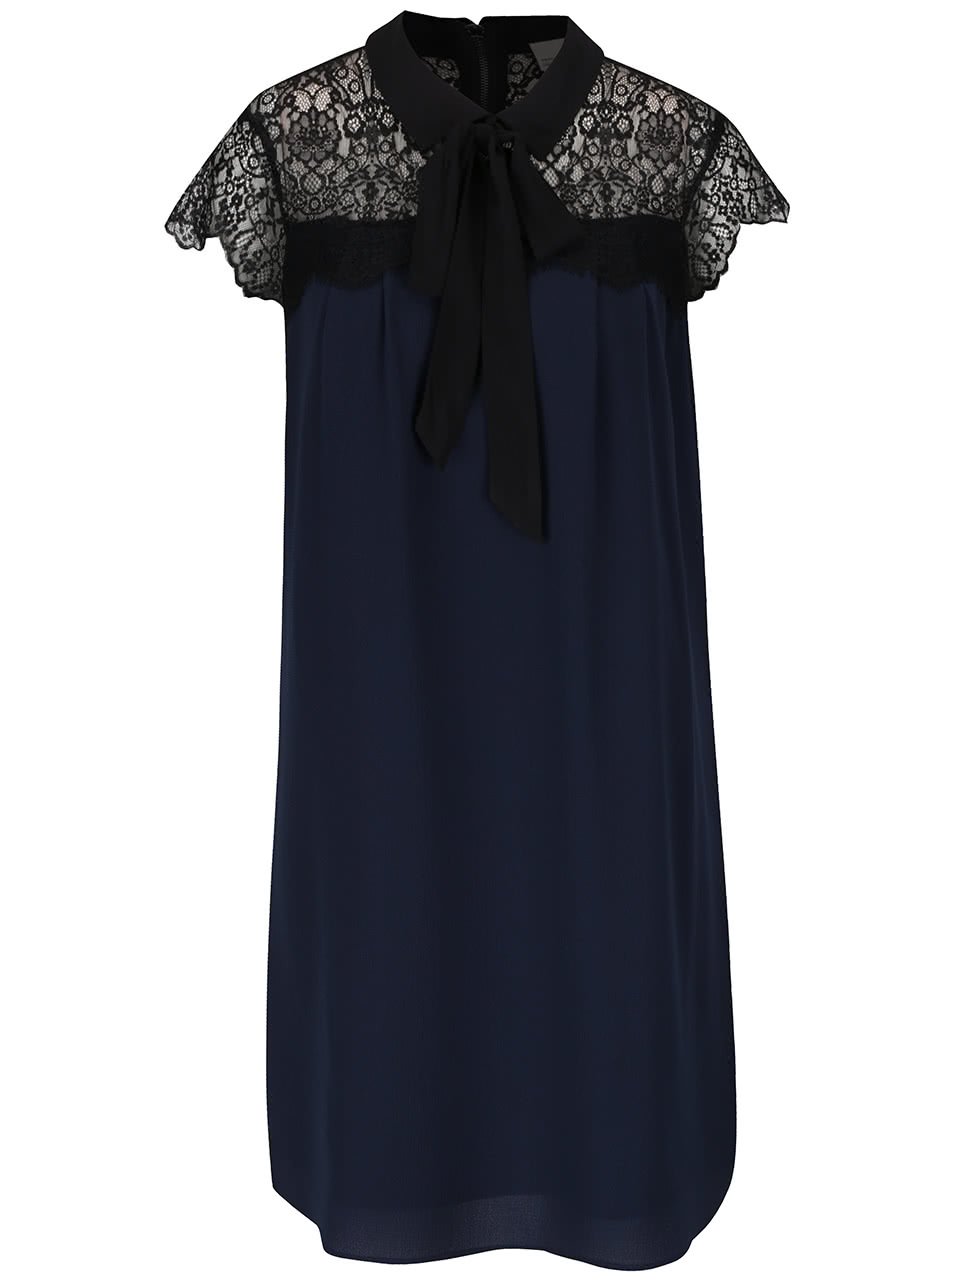 Černo-modré šaty s krajkovým dekoltem a vázankou Vero Moda Marie